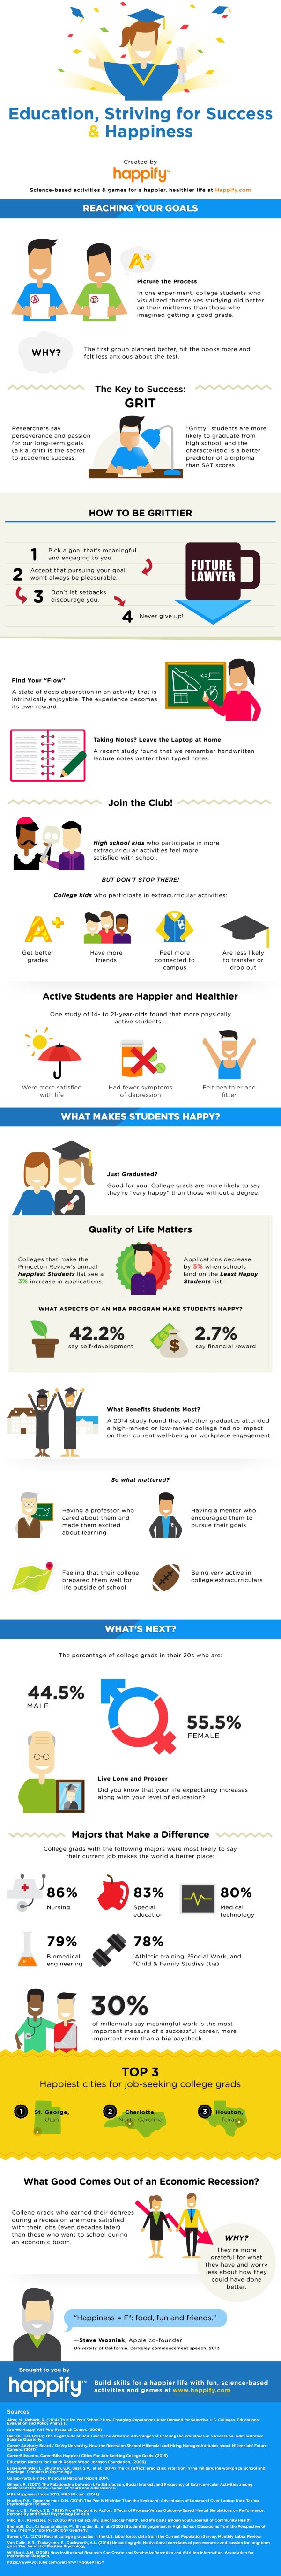 Happify infographic